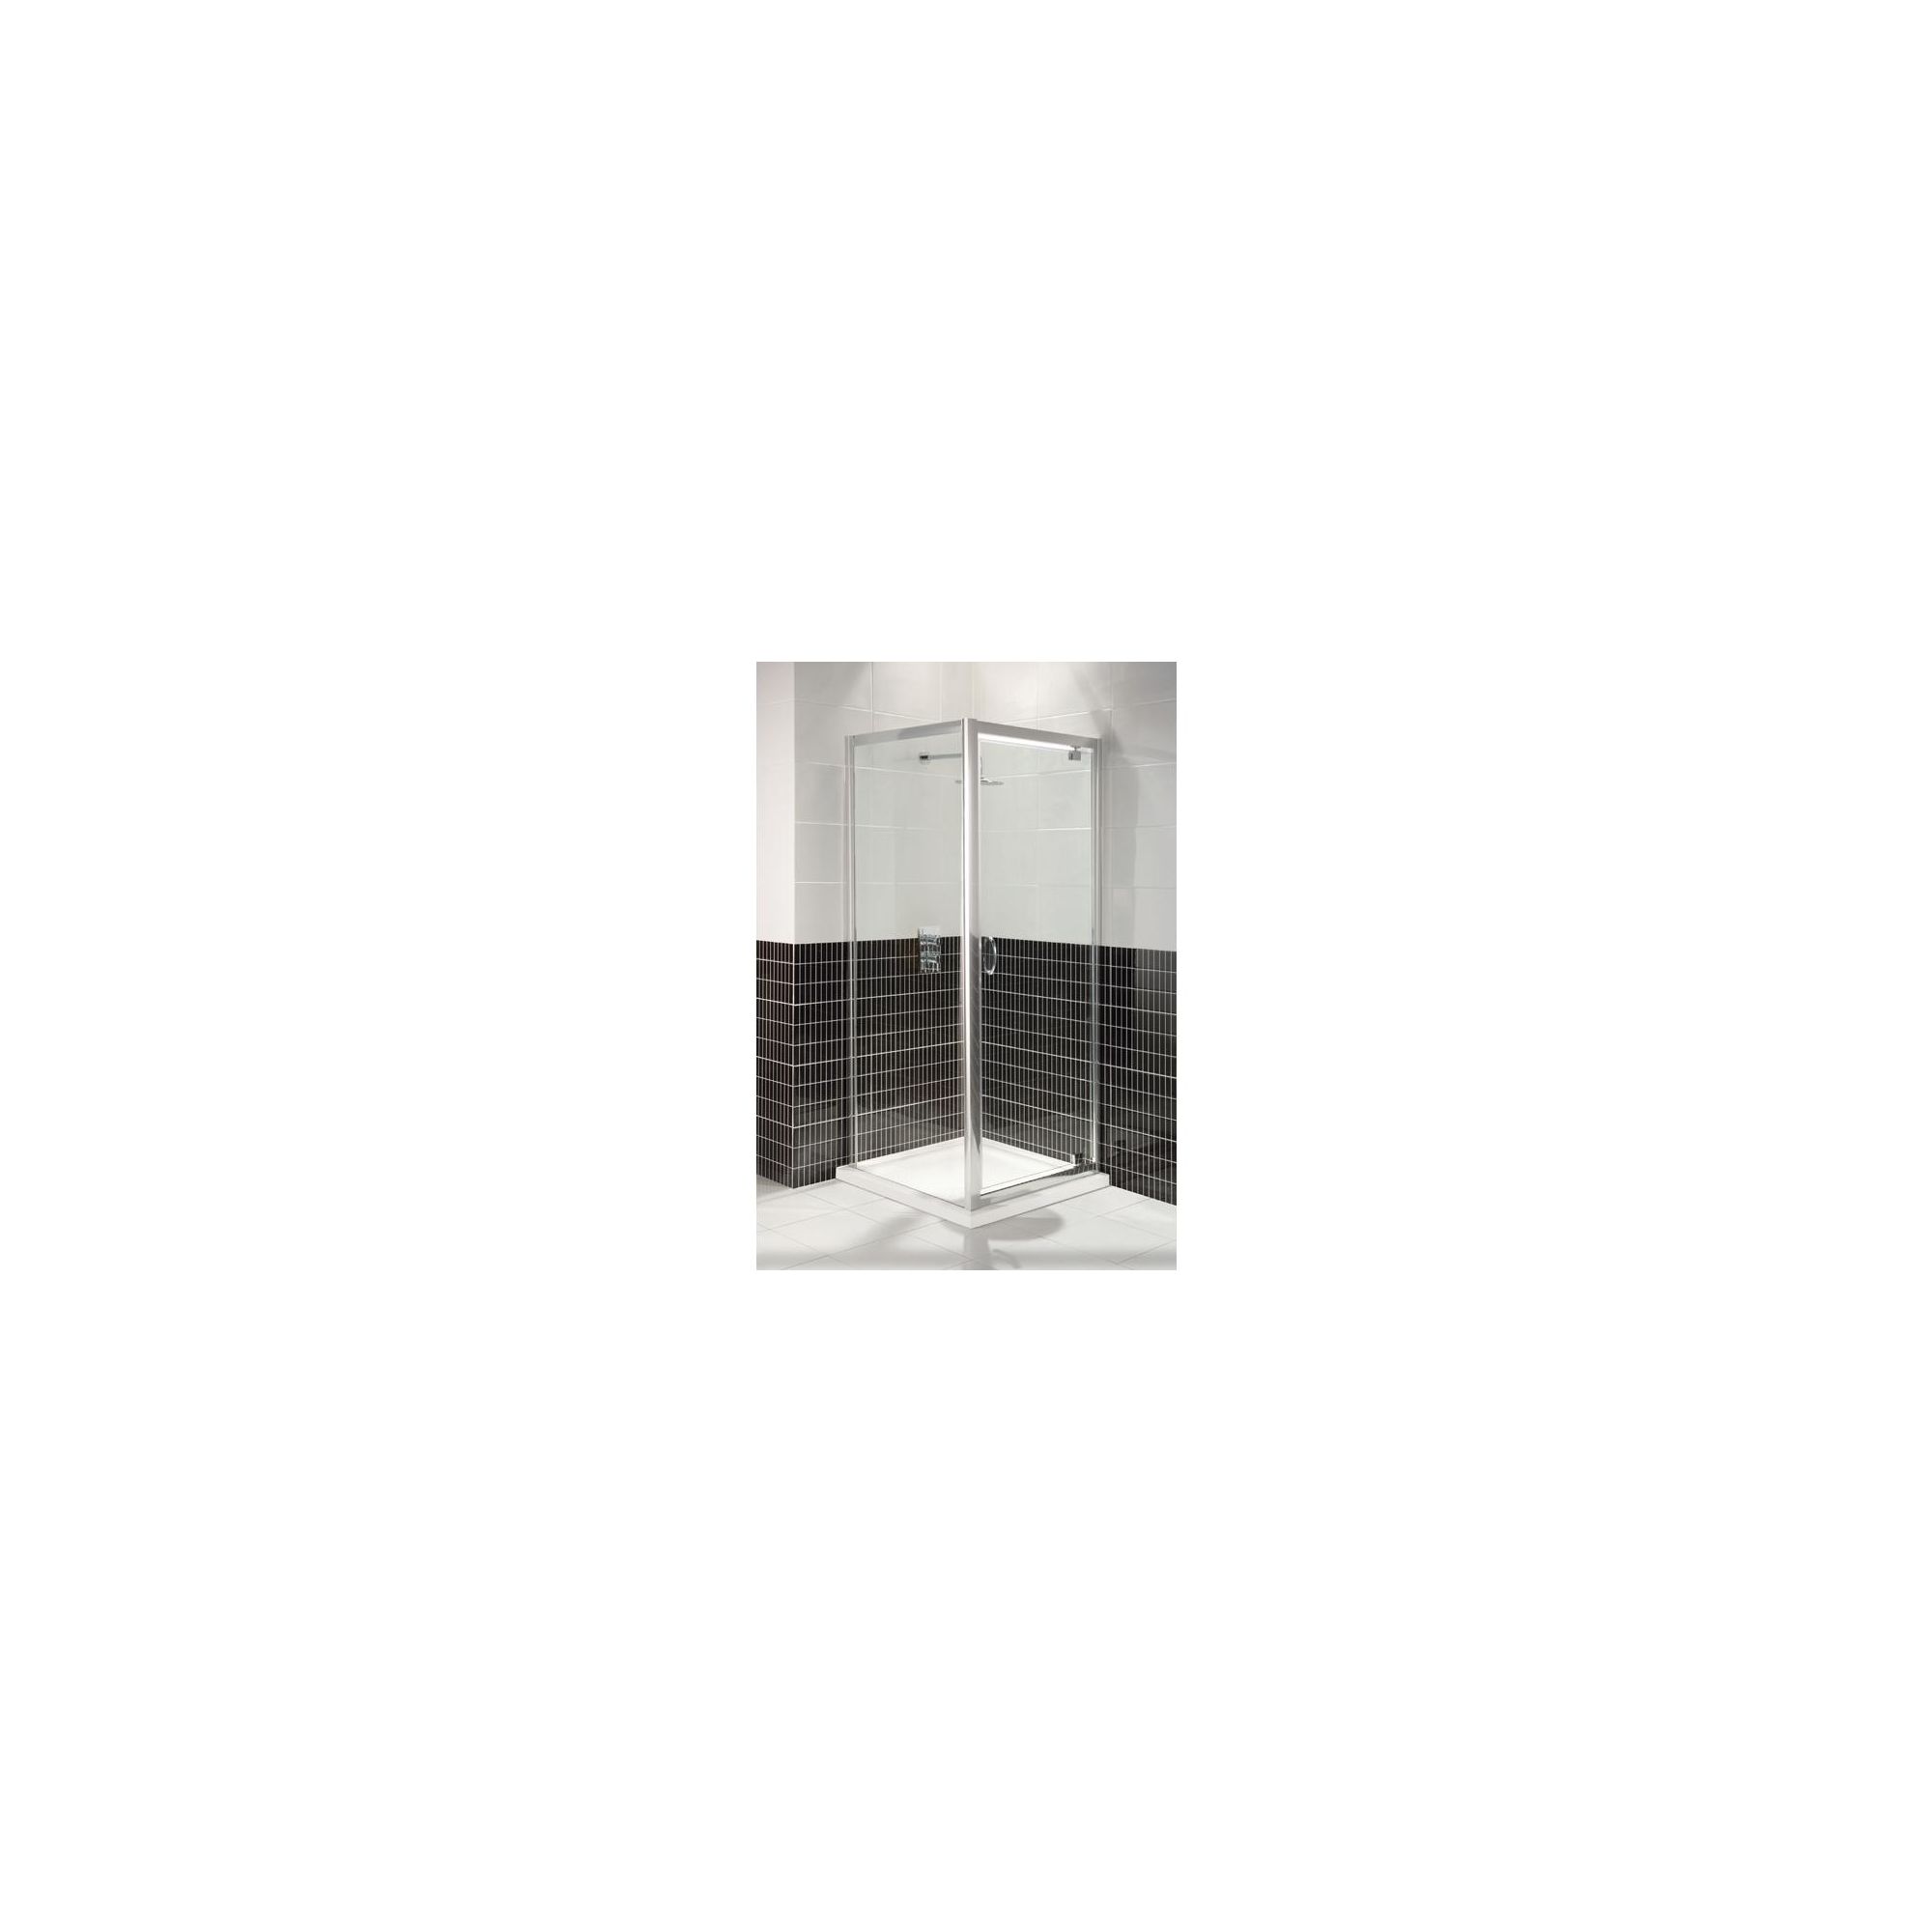 Balterley Framed Pivot Shower Enclosure, 900mm x 900mm, Standard Tray, 6mm Glass at Tesco Direct